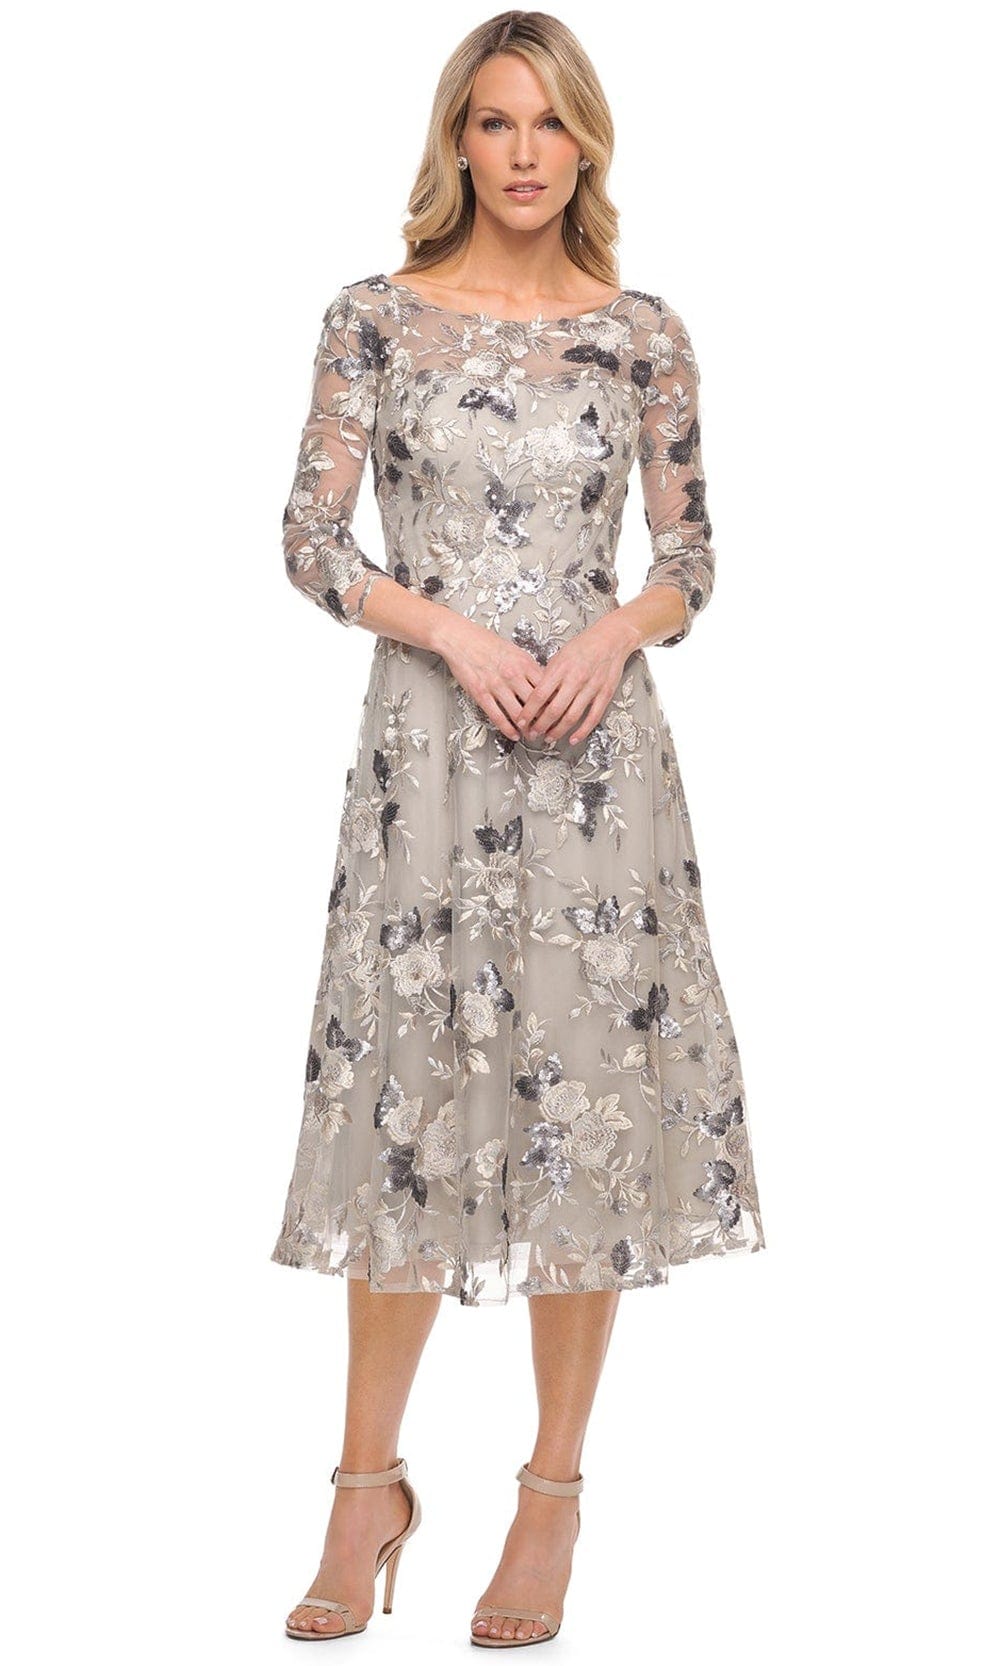 La Femme 29988 - Embroidered Tea Length Dress
